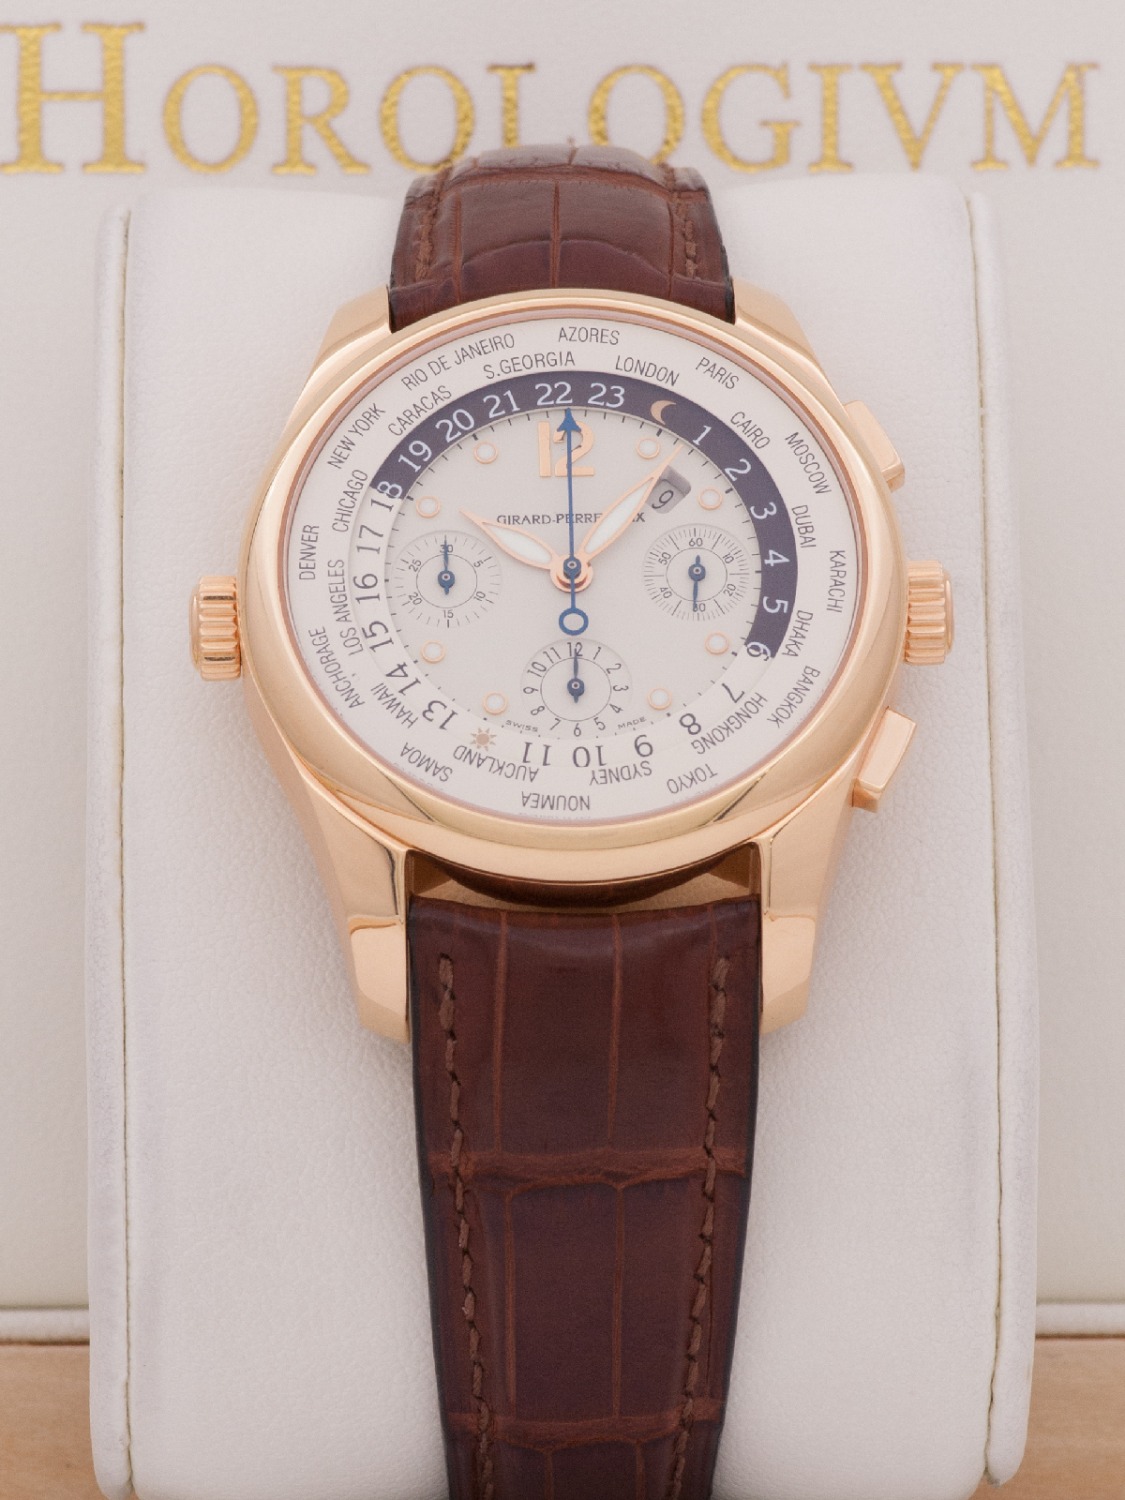 Girard Perregaux WW.TC Chronograph watch, rose gold